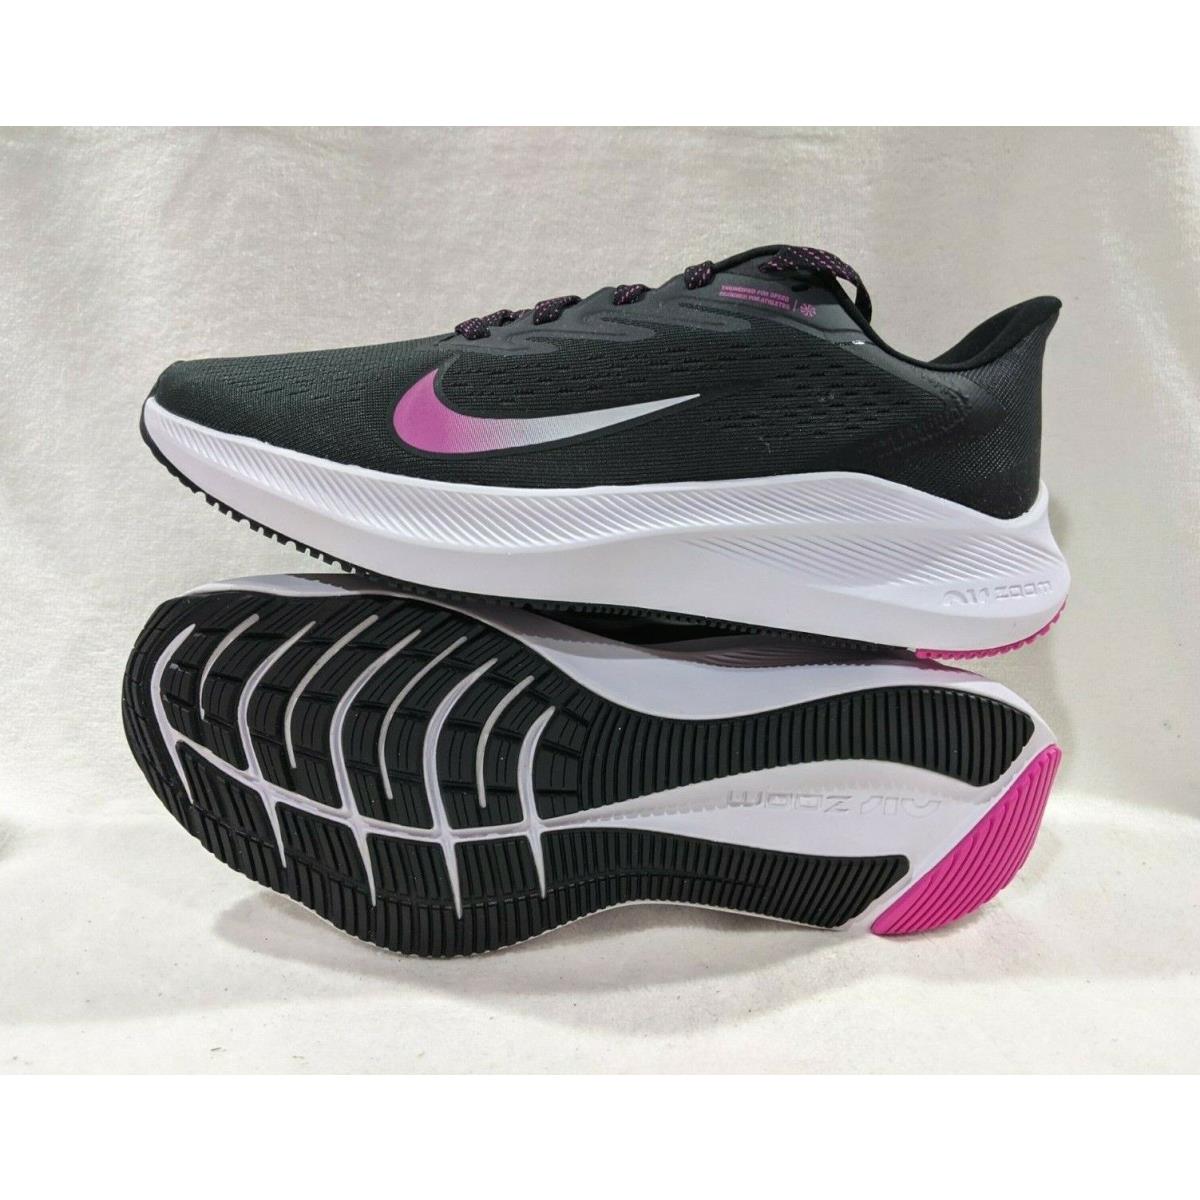 Nike shoes Zoom Winflo - Black , Grey , Pink 0